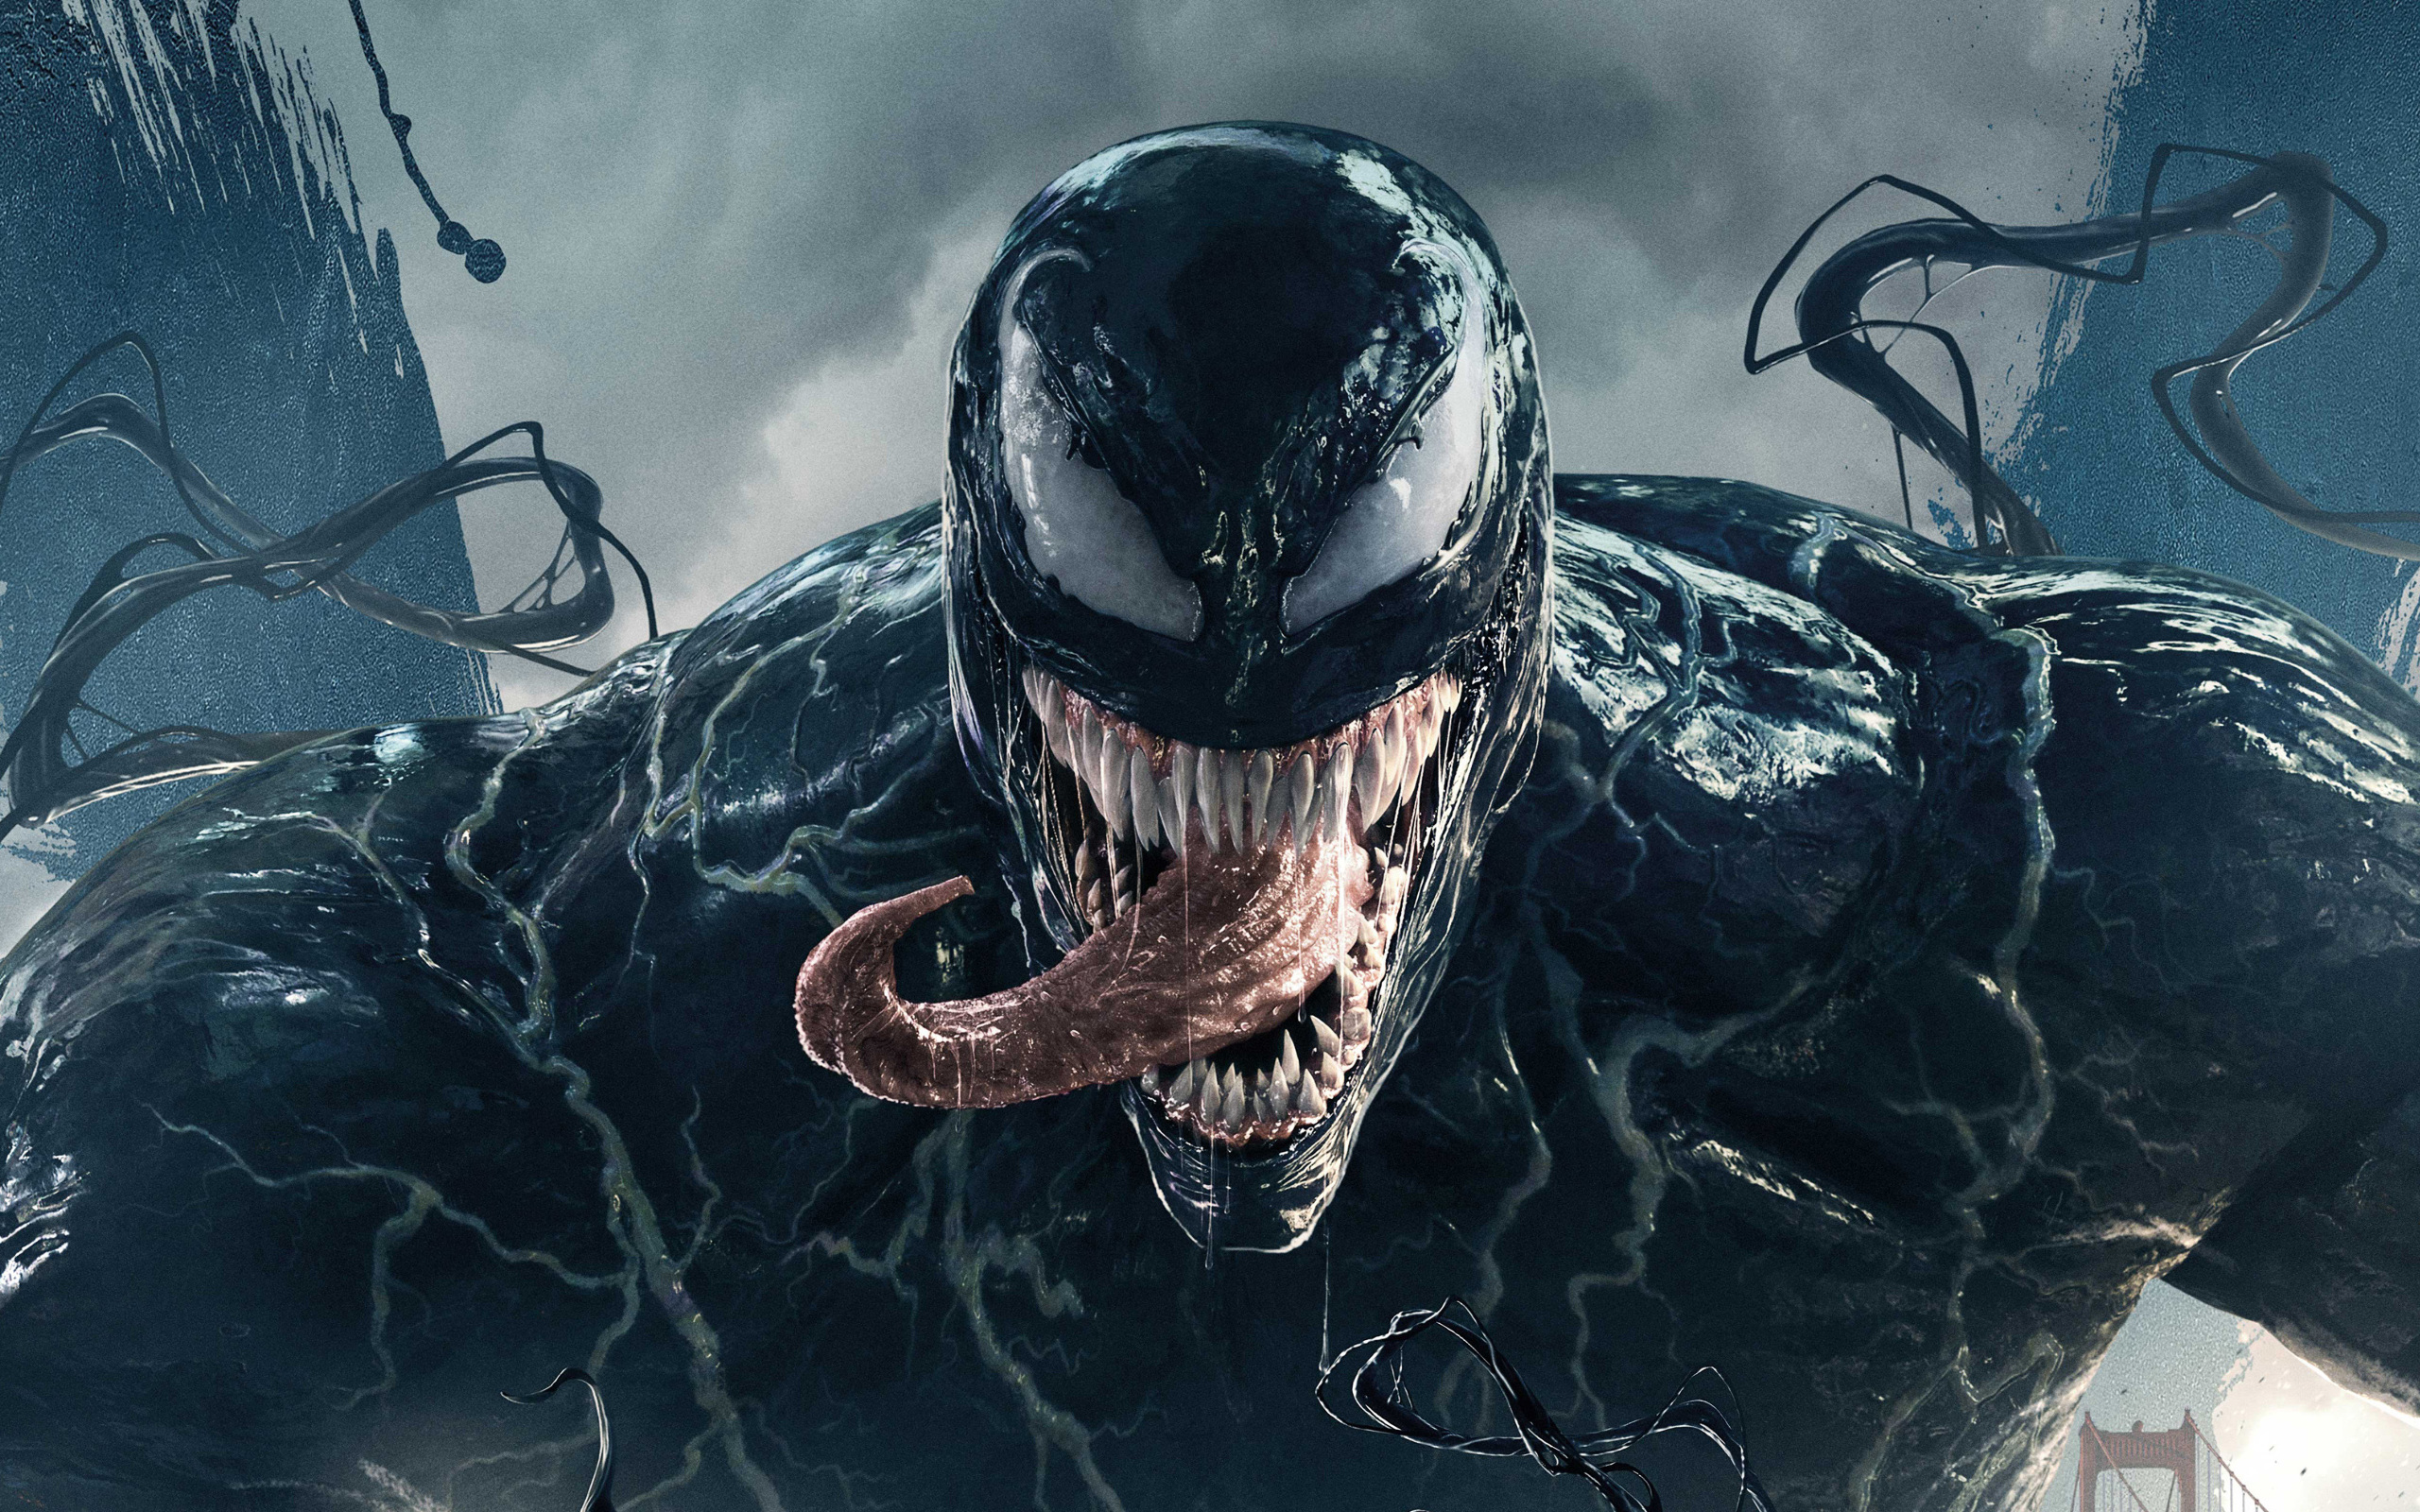 Venom Marvel Cinematic Universe Marvel Comics Creature Frontal View 2560x1600 Wallpaper Wallhaven Cc